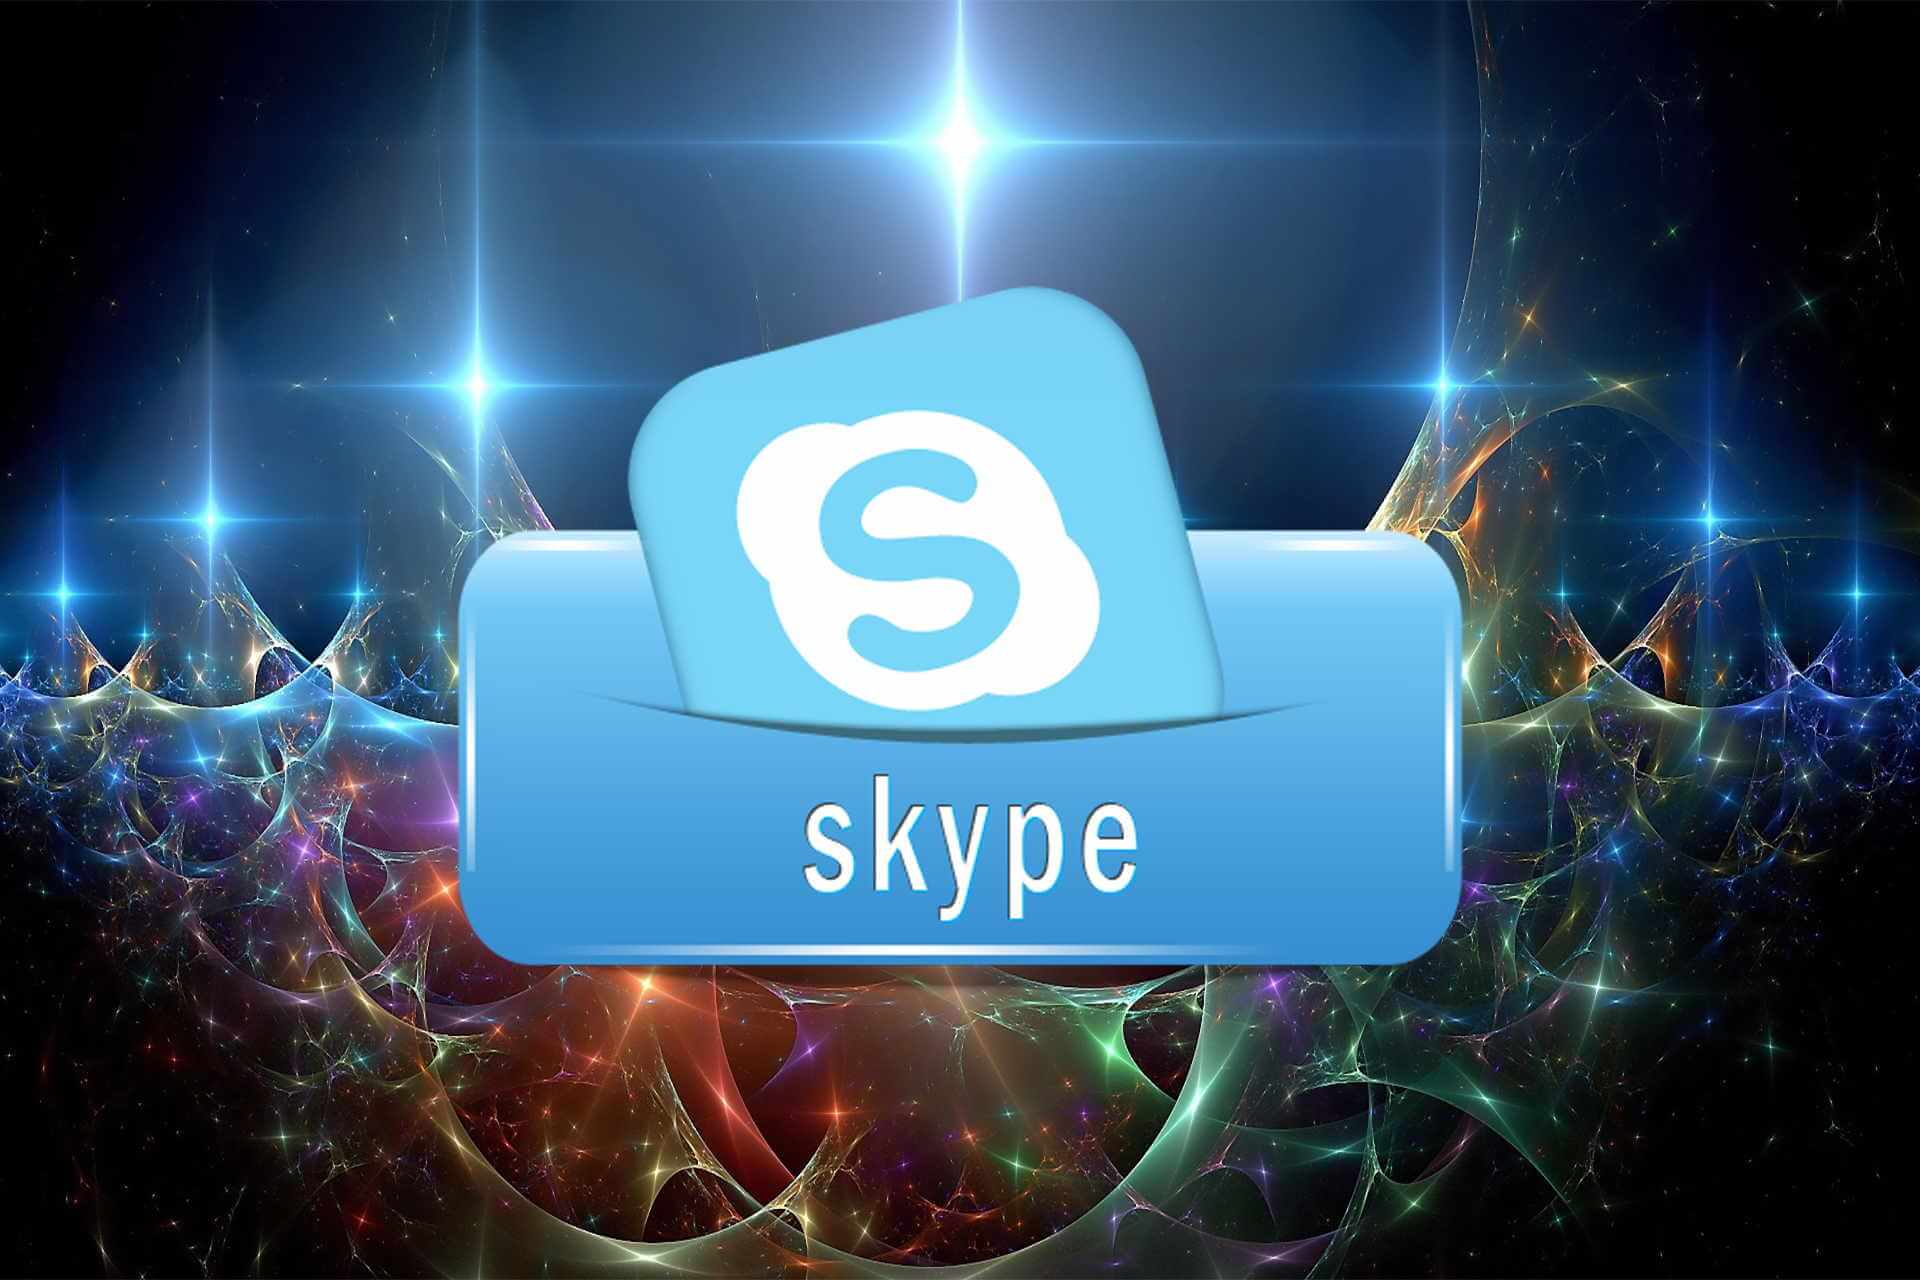 enjoy Skype